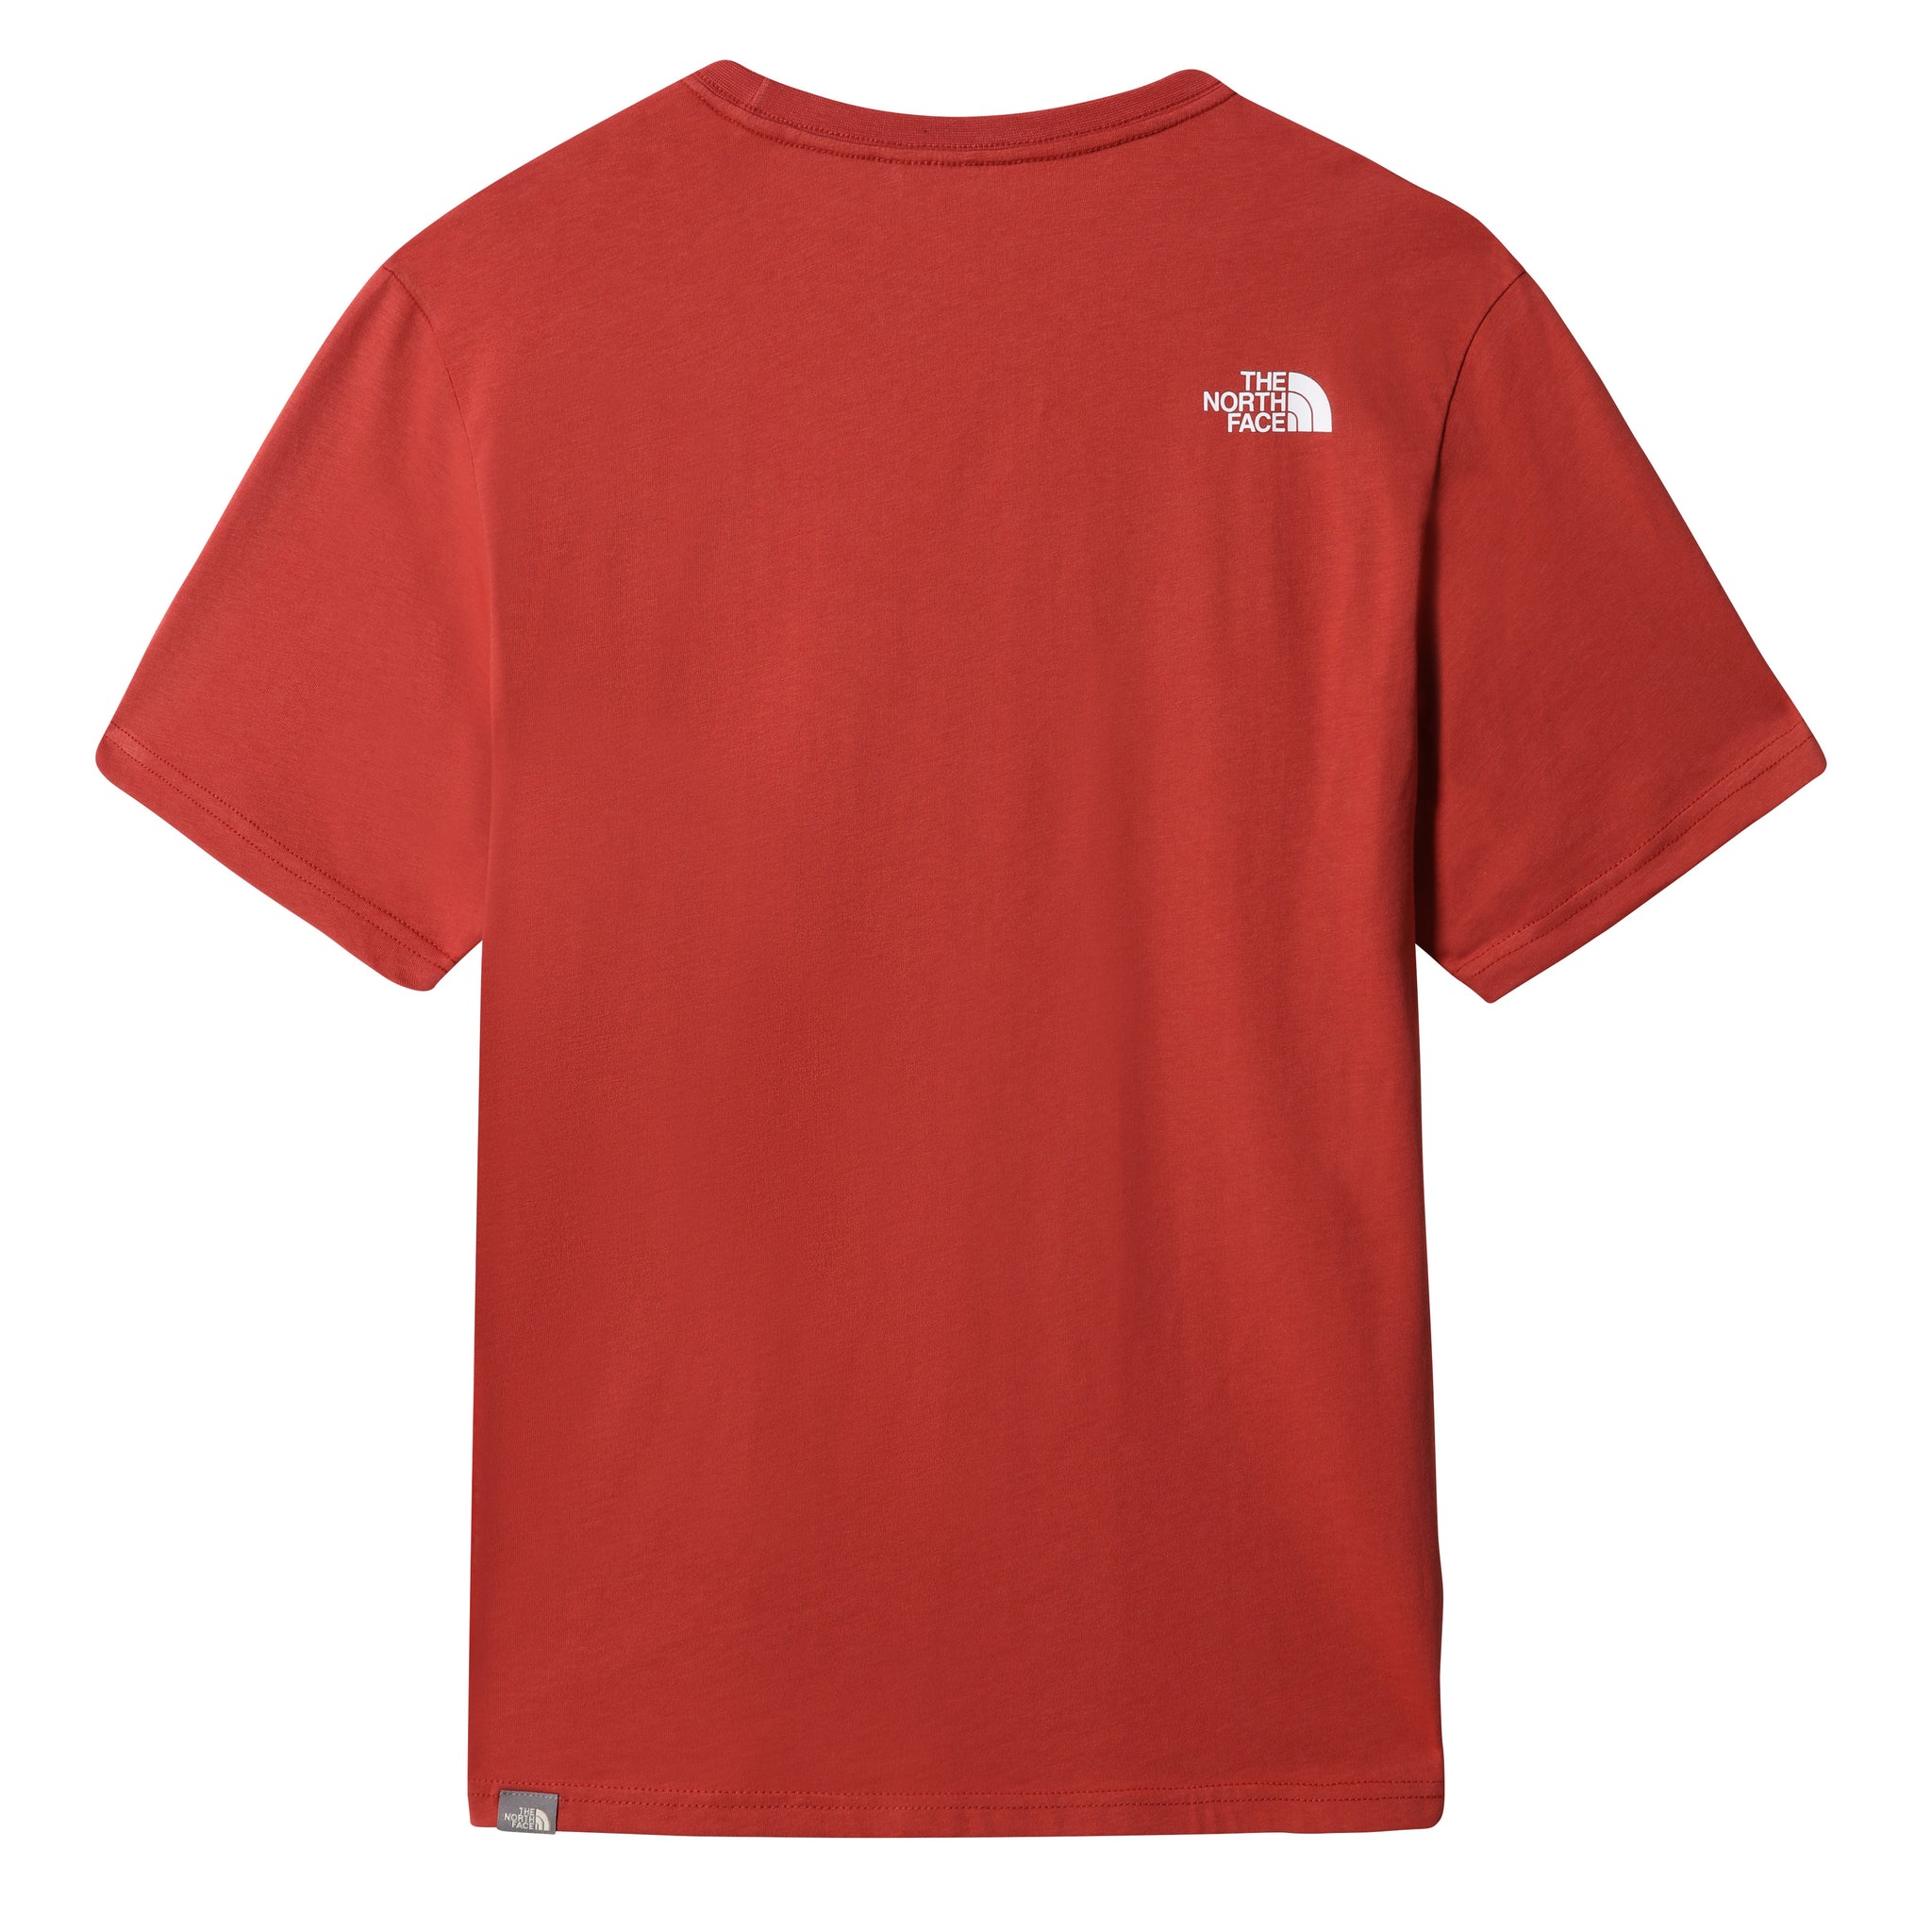 T-Shirt The North Face Uomo / Rosso - Ideal Moda